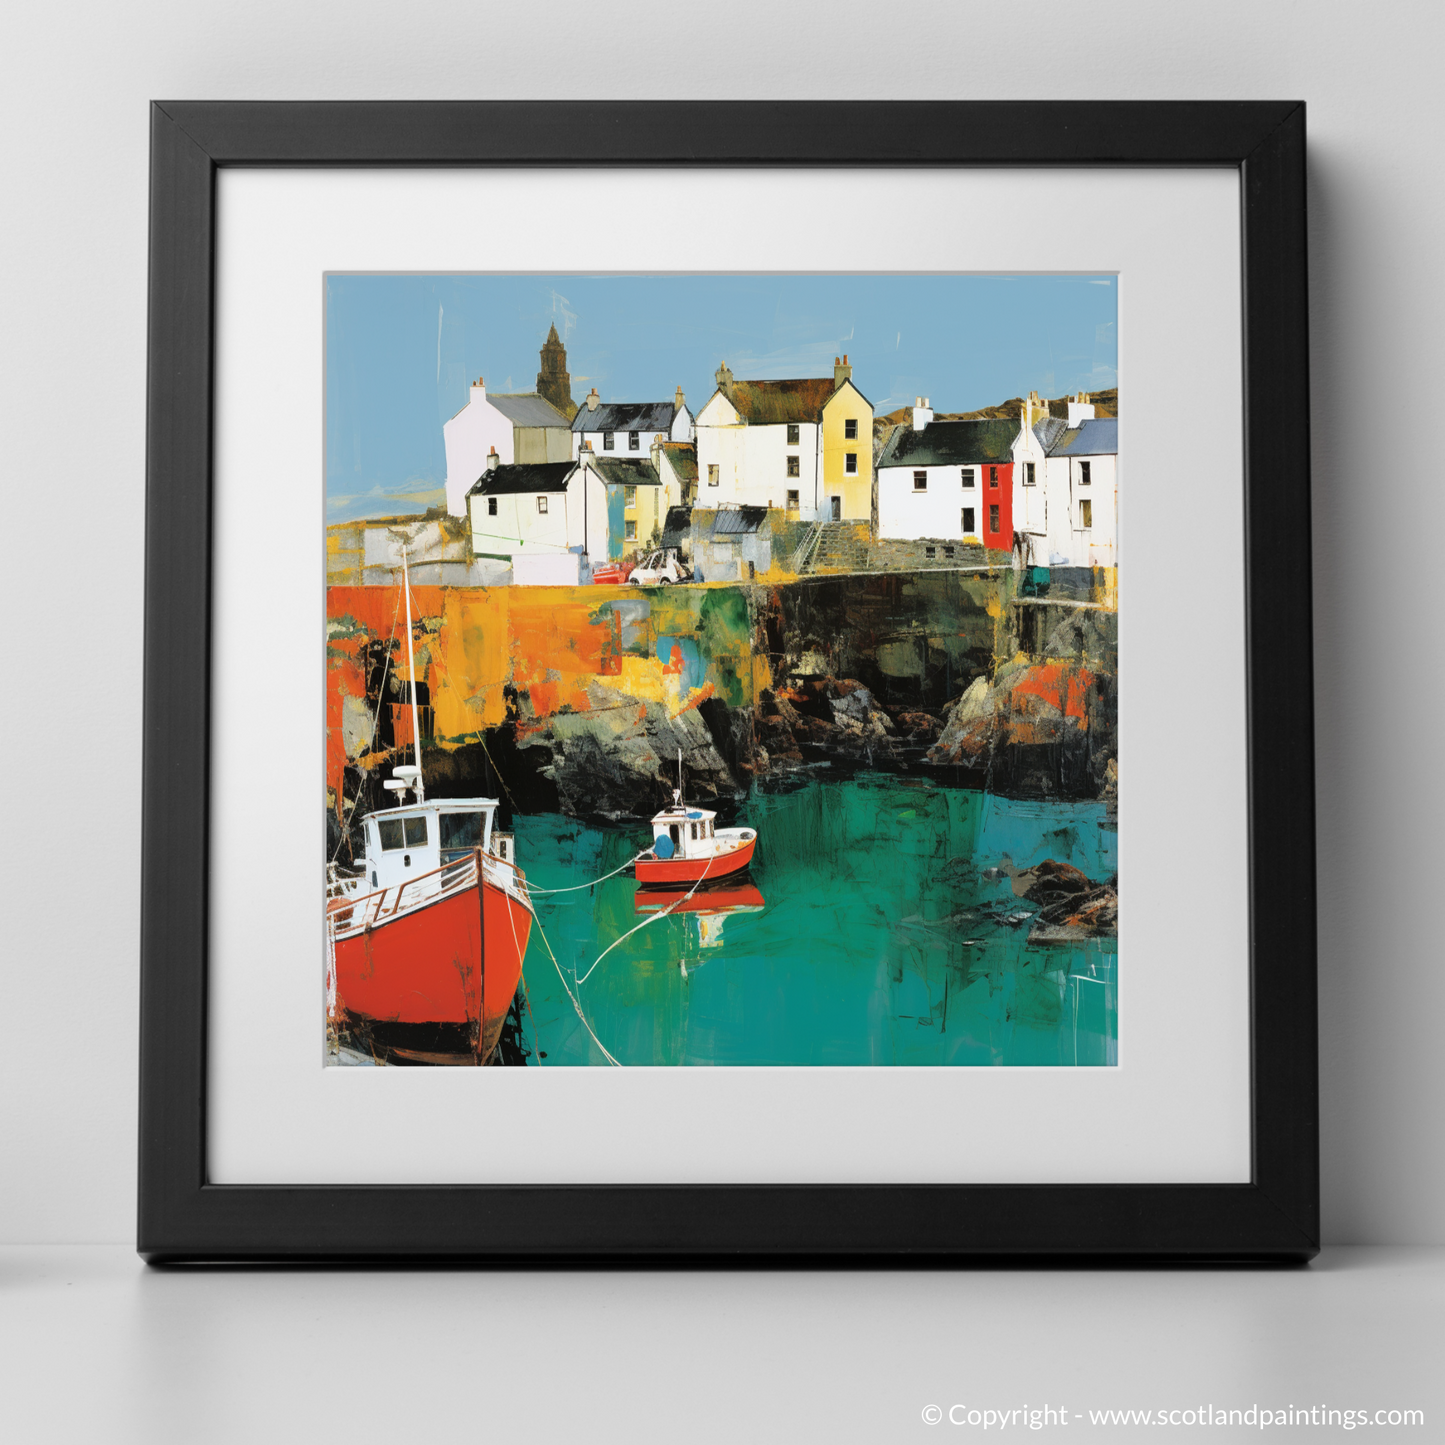 Pop Art Portpatrick: A Colourful Coastal Rendition